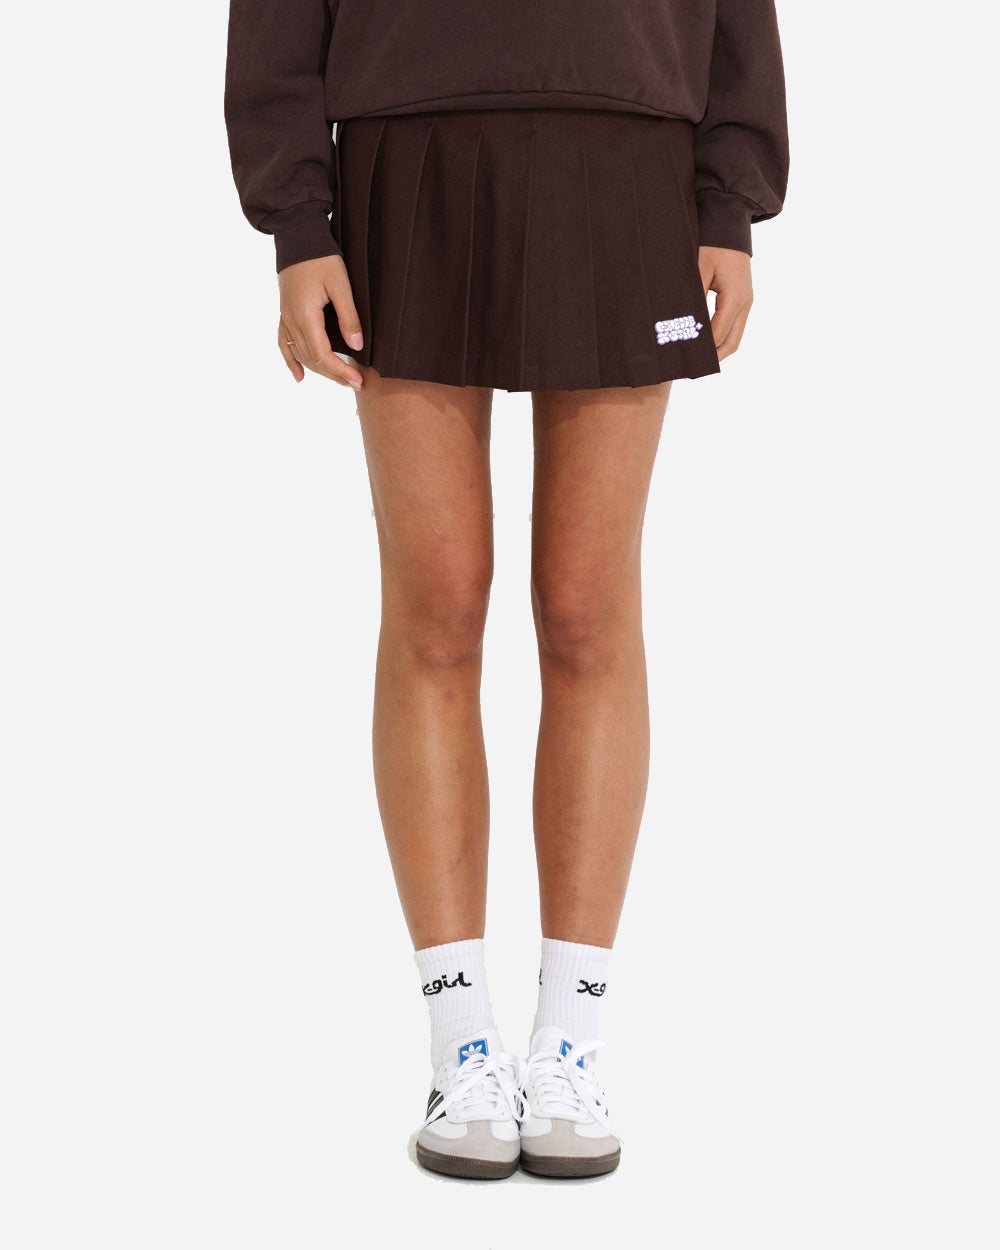 Finesse x X-Girl Tennis Skirt Chocolate RGB300-CHC